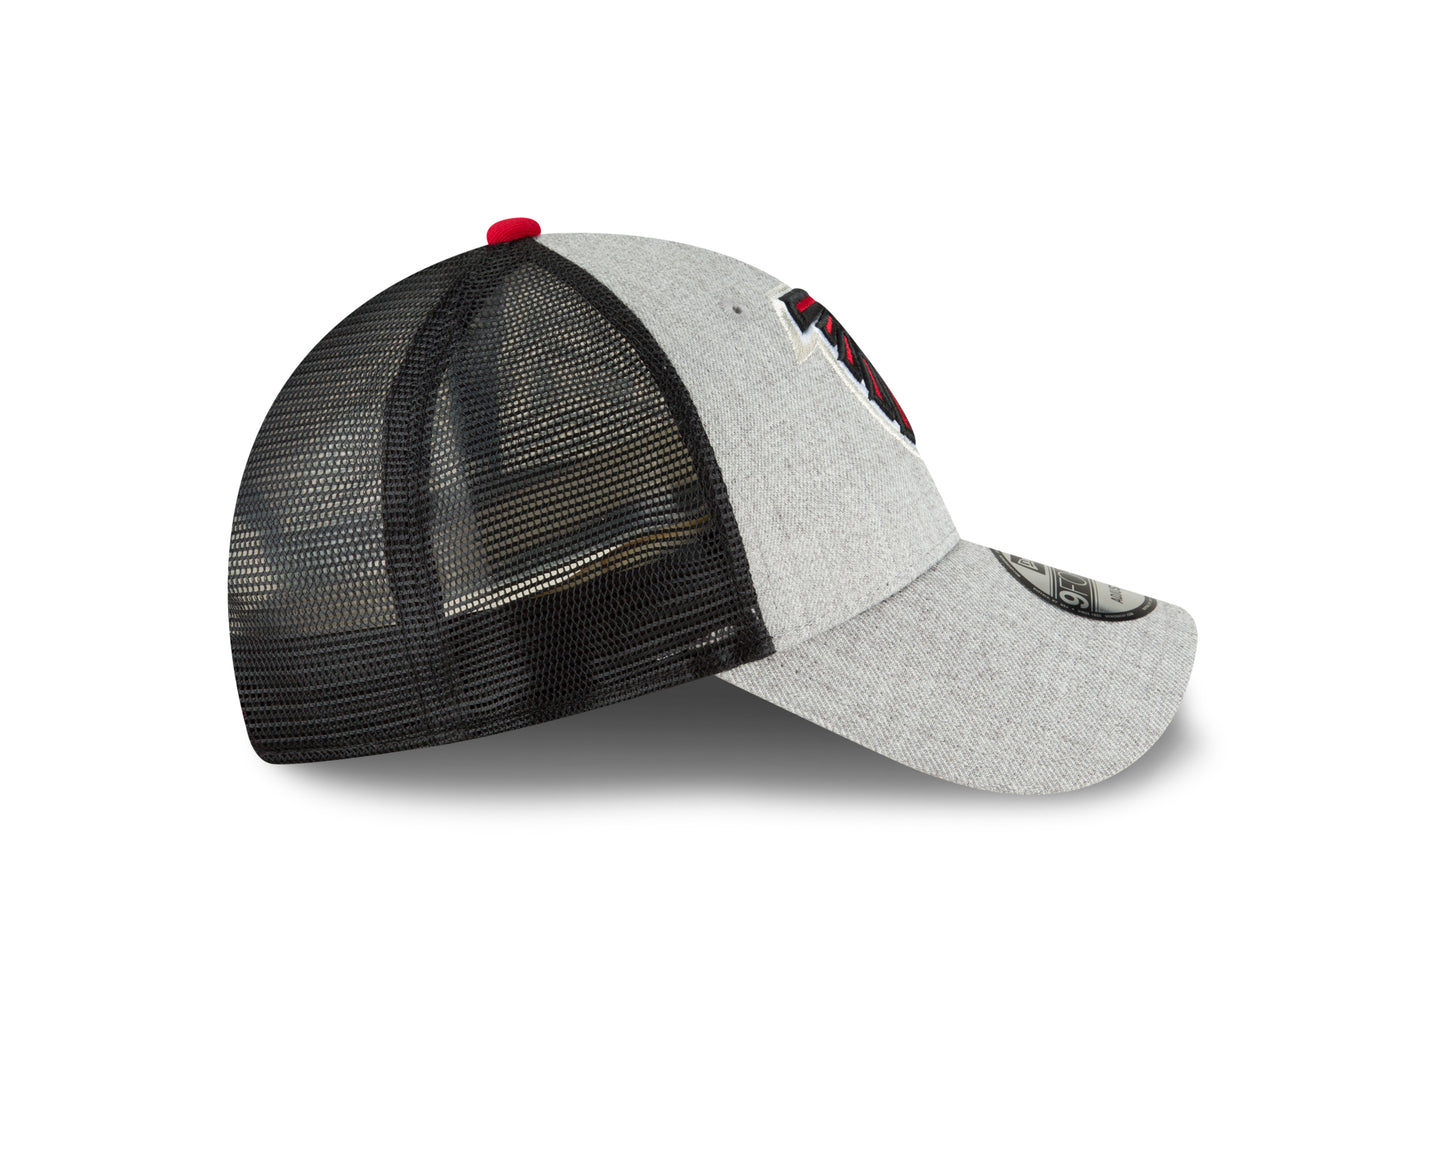 Atlanta Falcons Heathered Turn Trucker Mesh 9FORTY Adjustable Snapback Hat / Cap